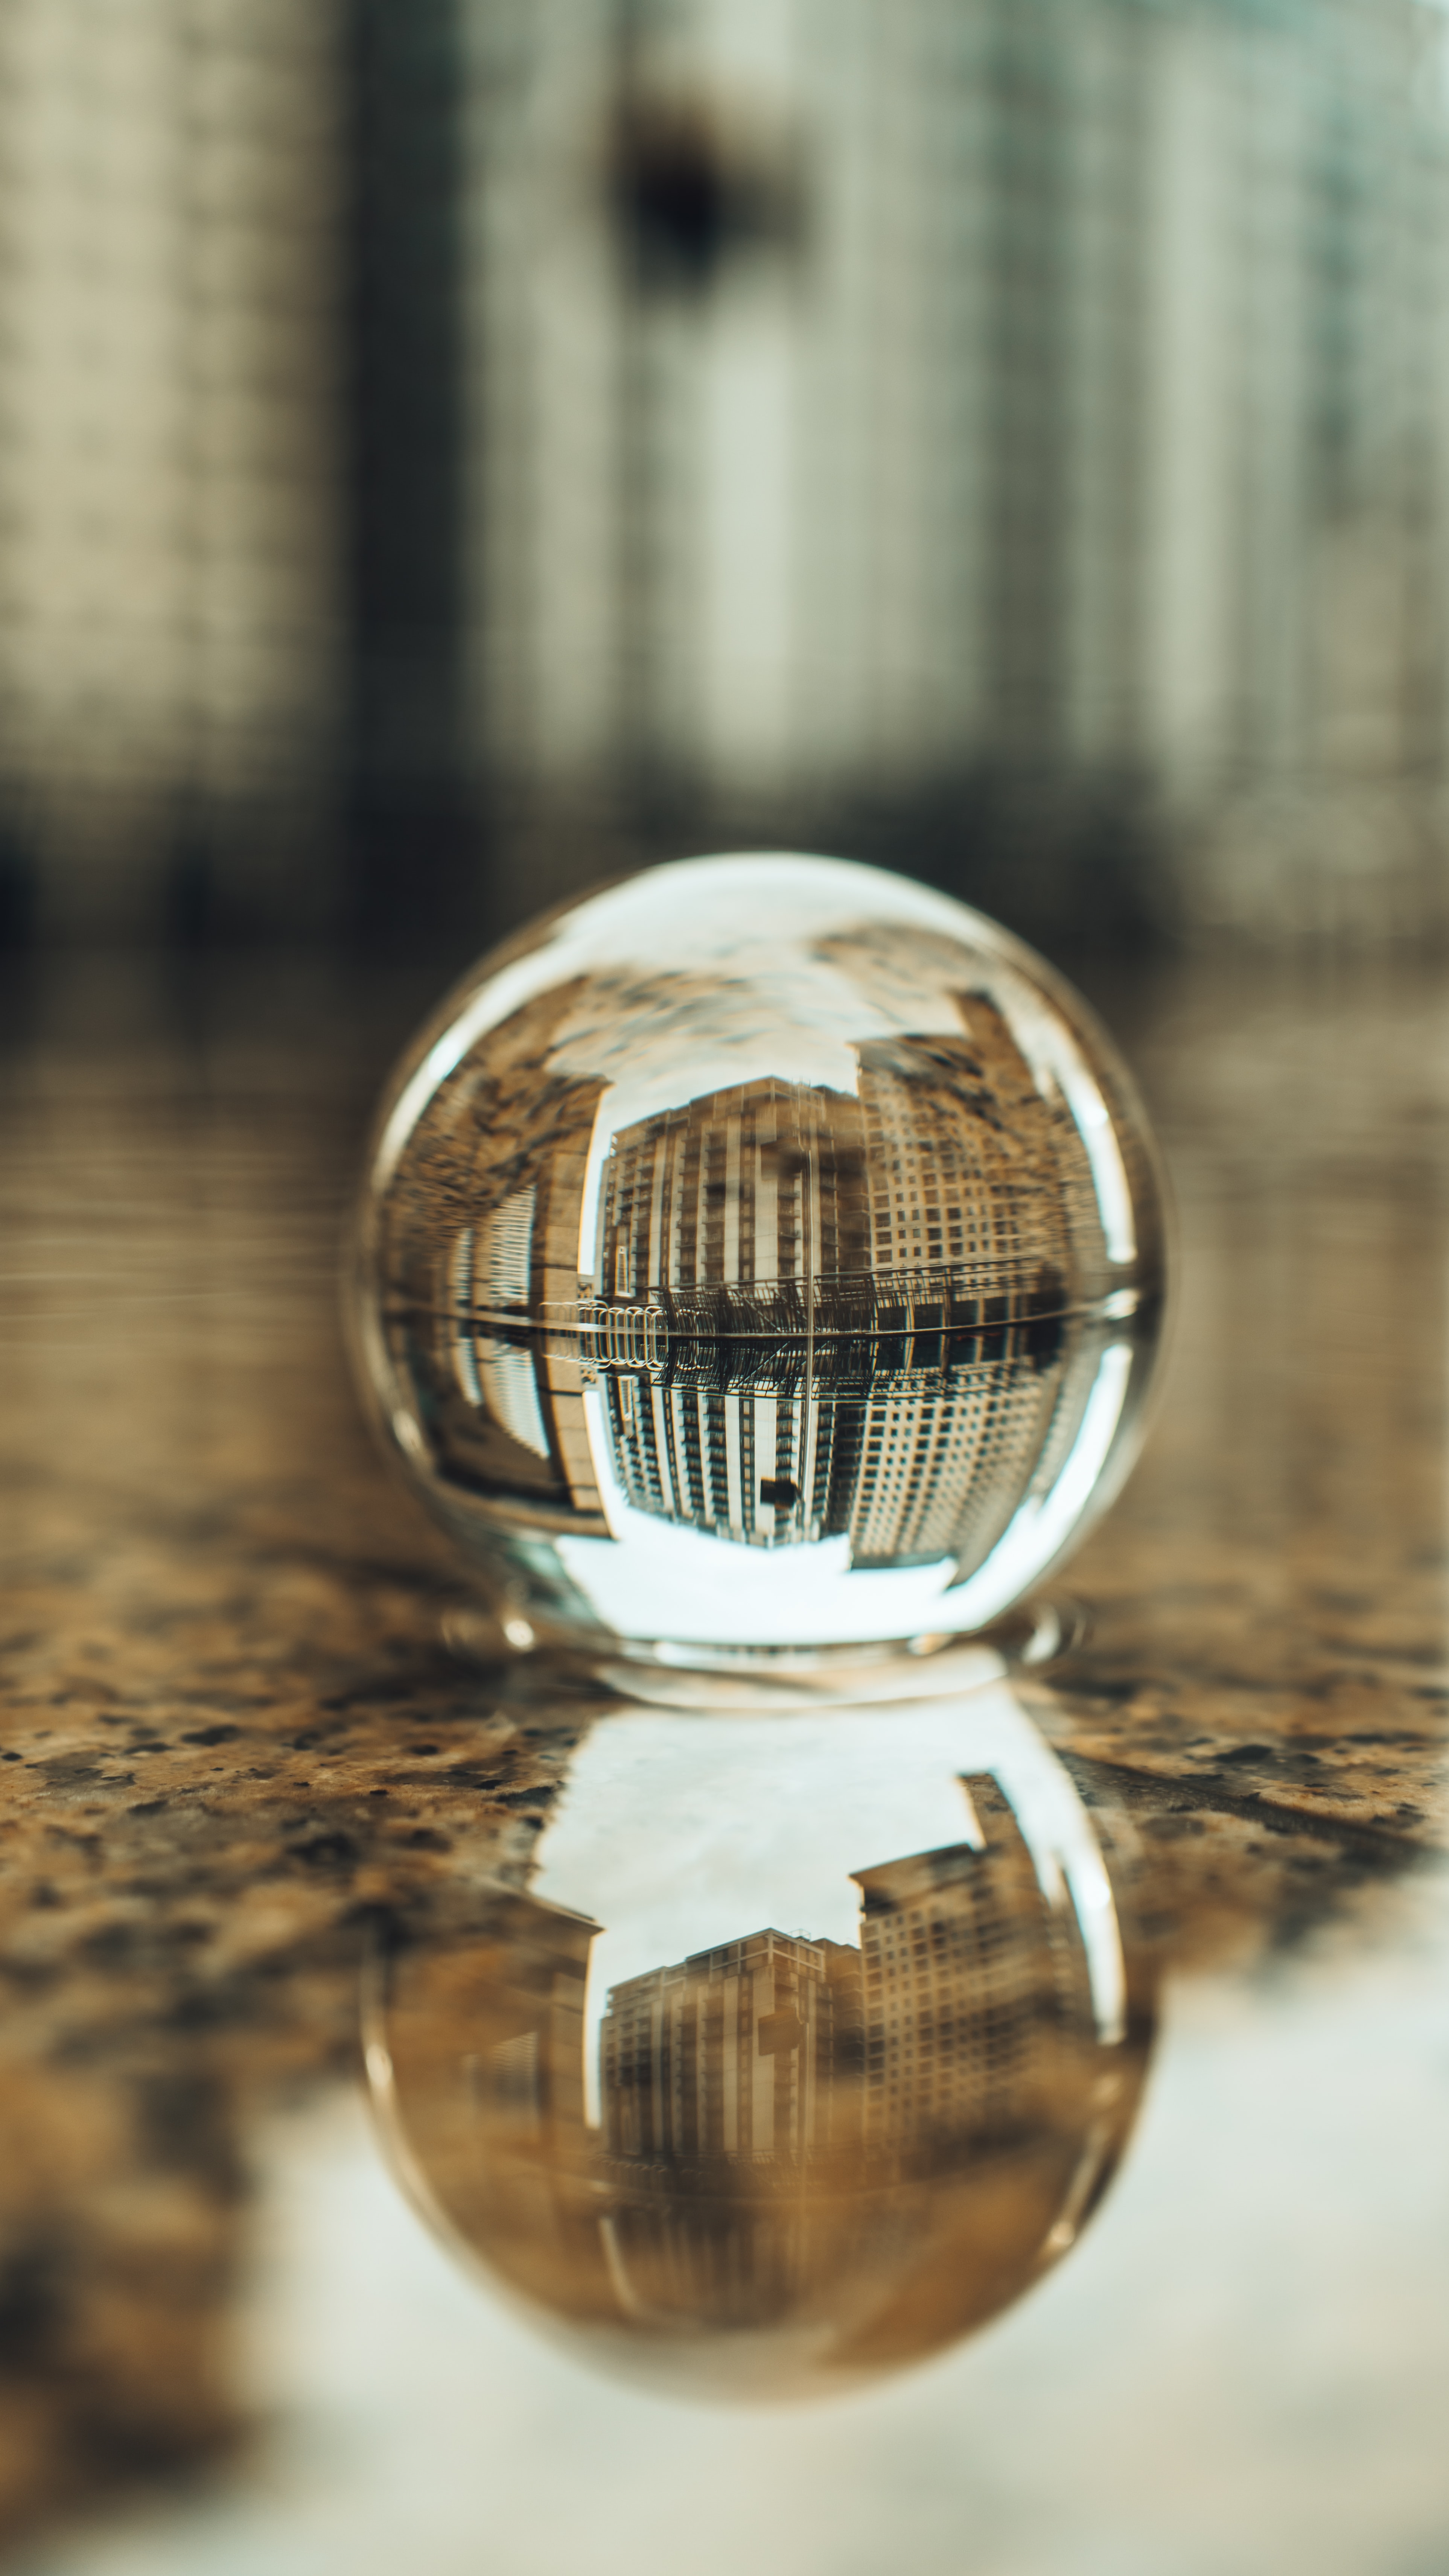 HD wallpaper crystal ball, ball, water, building, reflection, miscellanea, miscellaneous